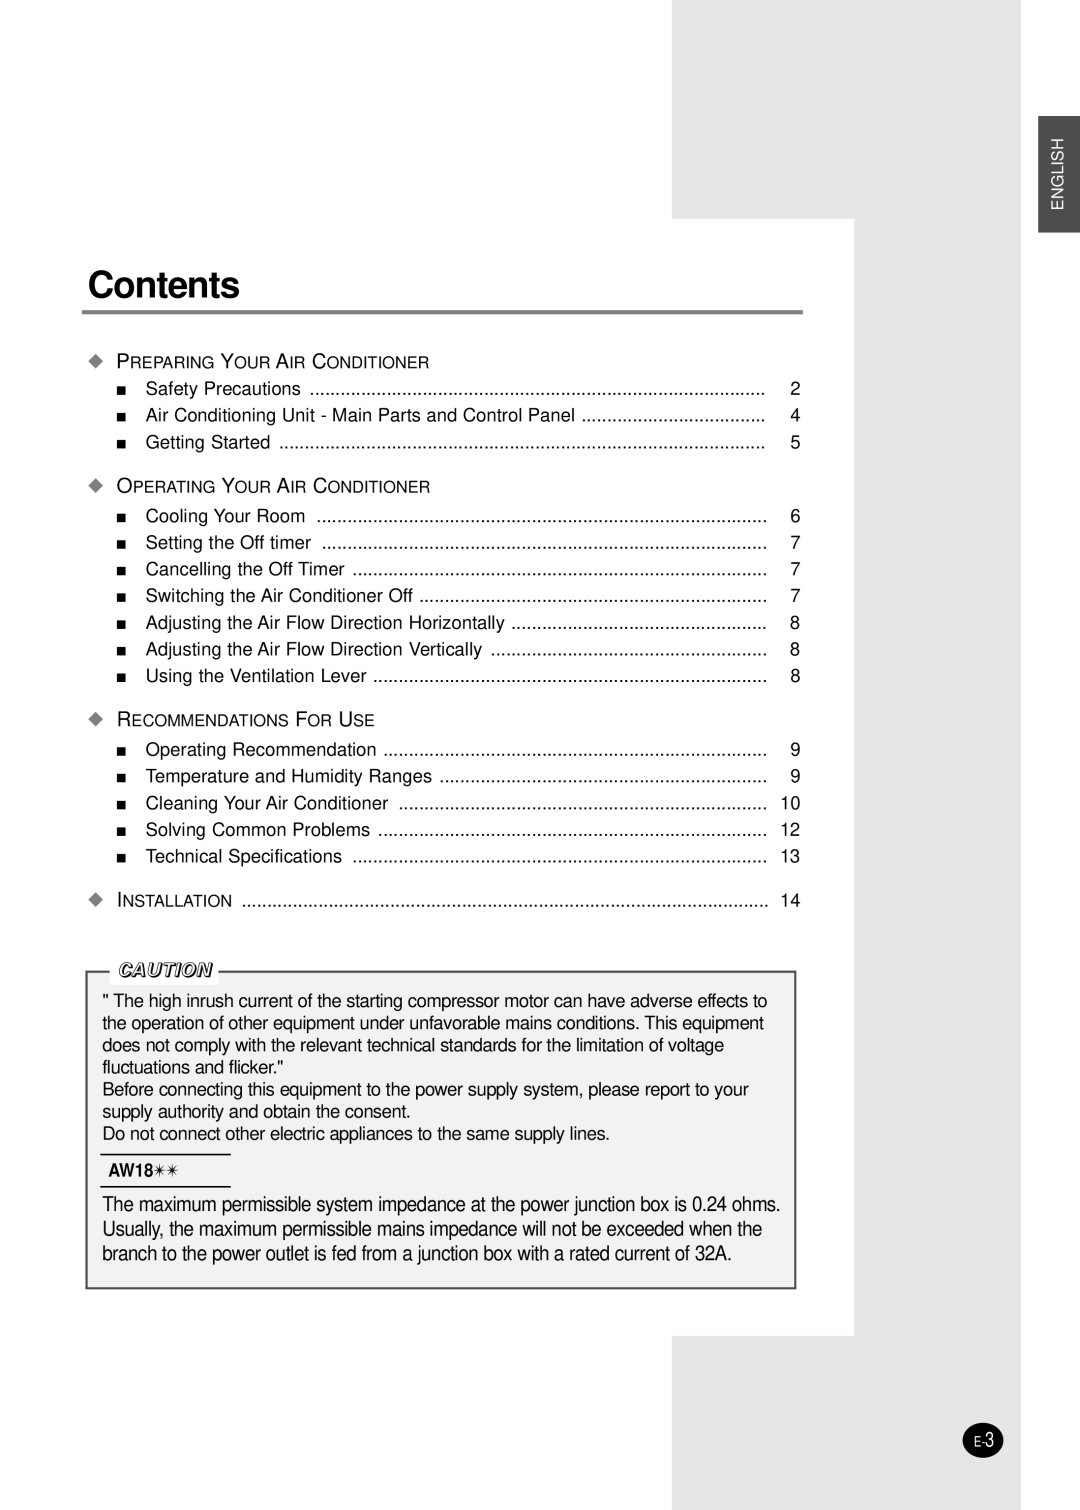 Samsung AW09A8SB manuel dutilisation Contents, AW18 